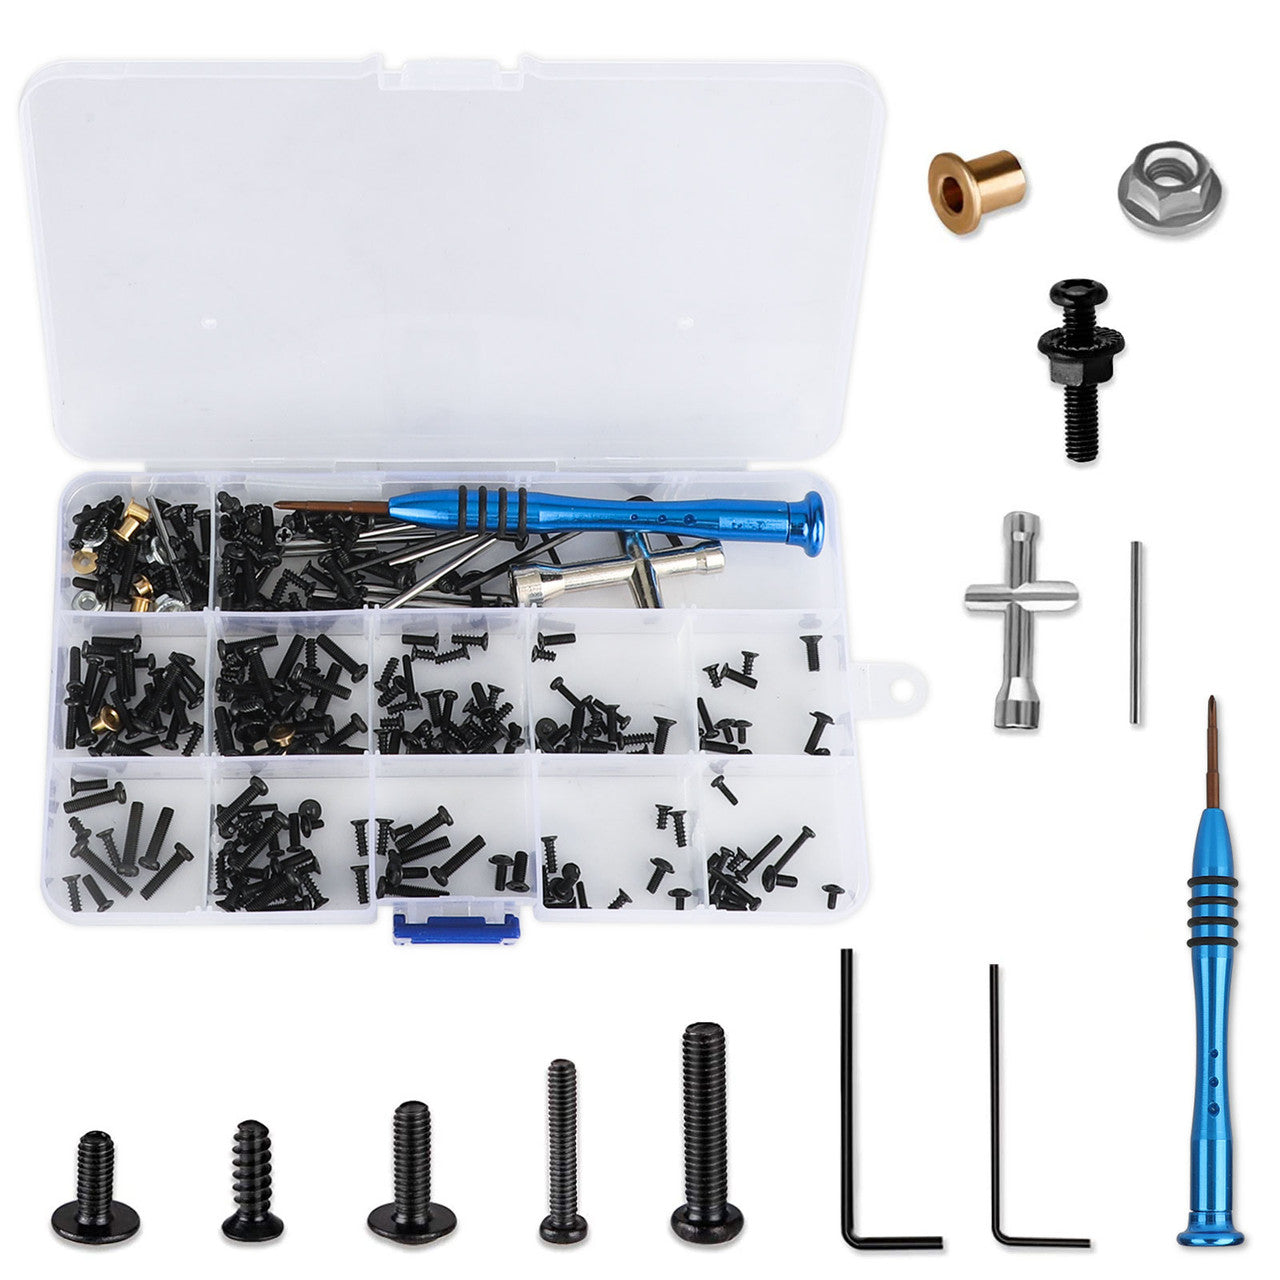 Repair Tool Kit Include Screws, Nuts and Screwdriver for RC Car Model WLtoys